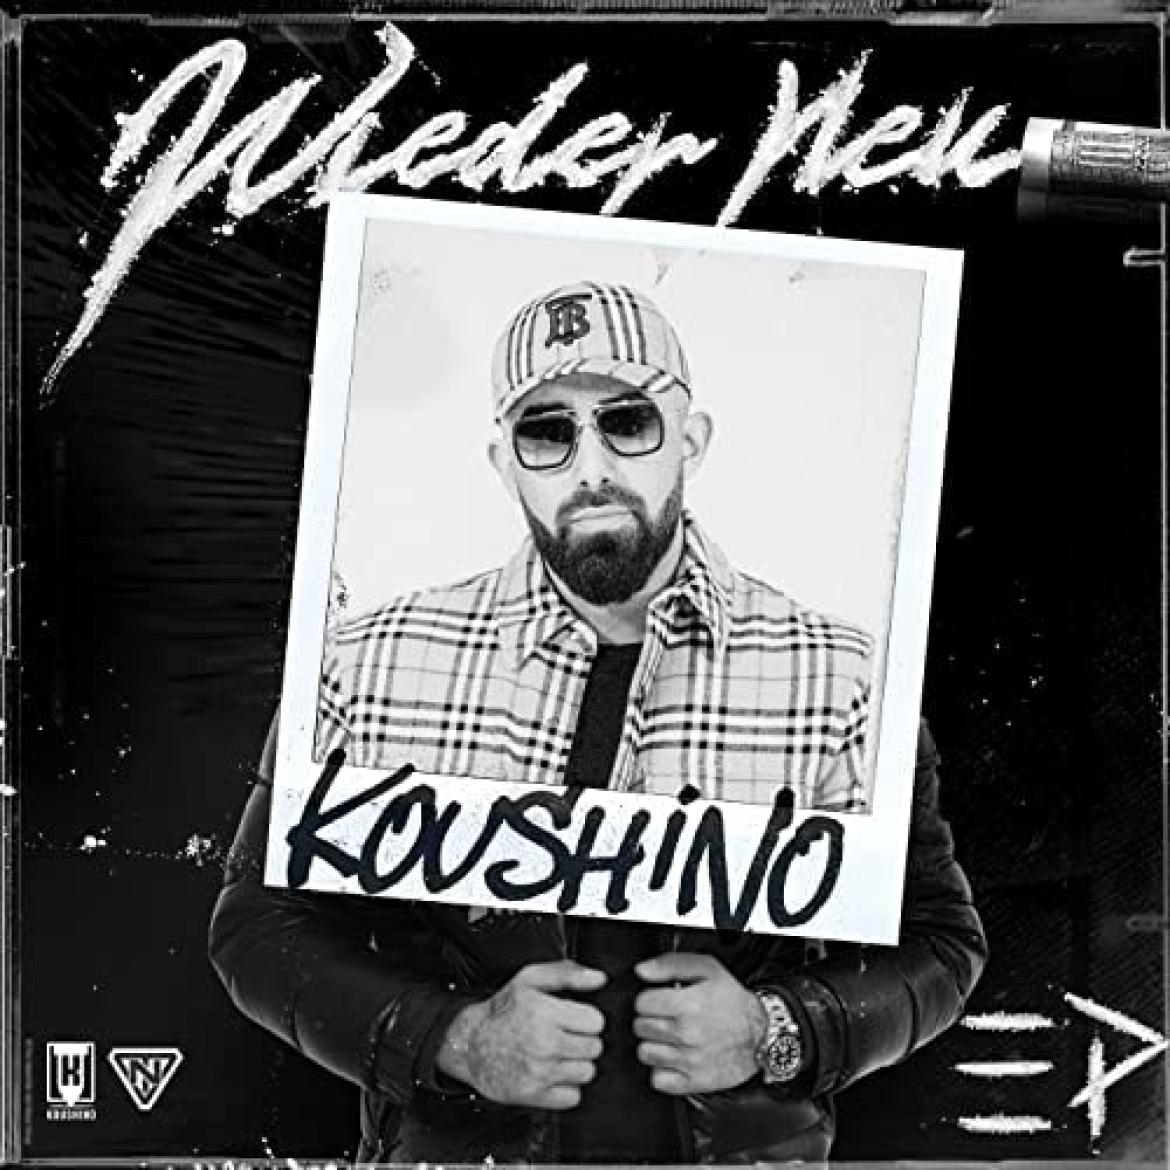 Cover zu Koushino's EP "Wieder neu"